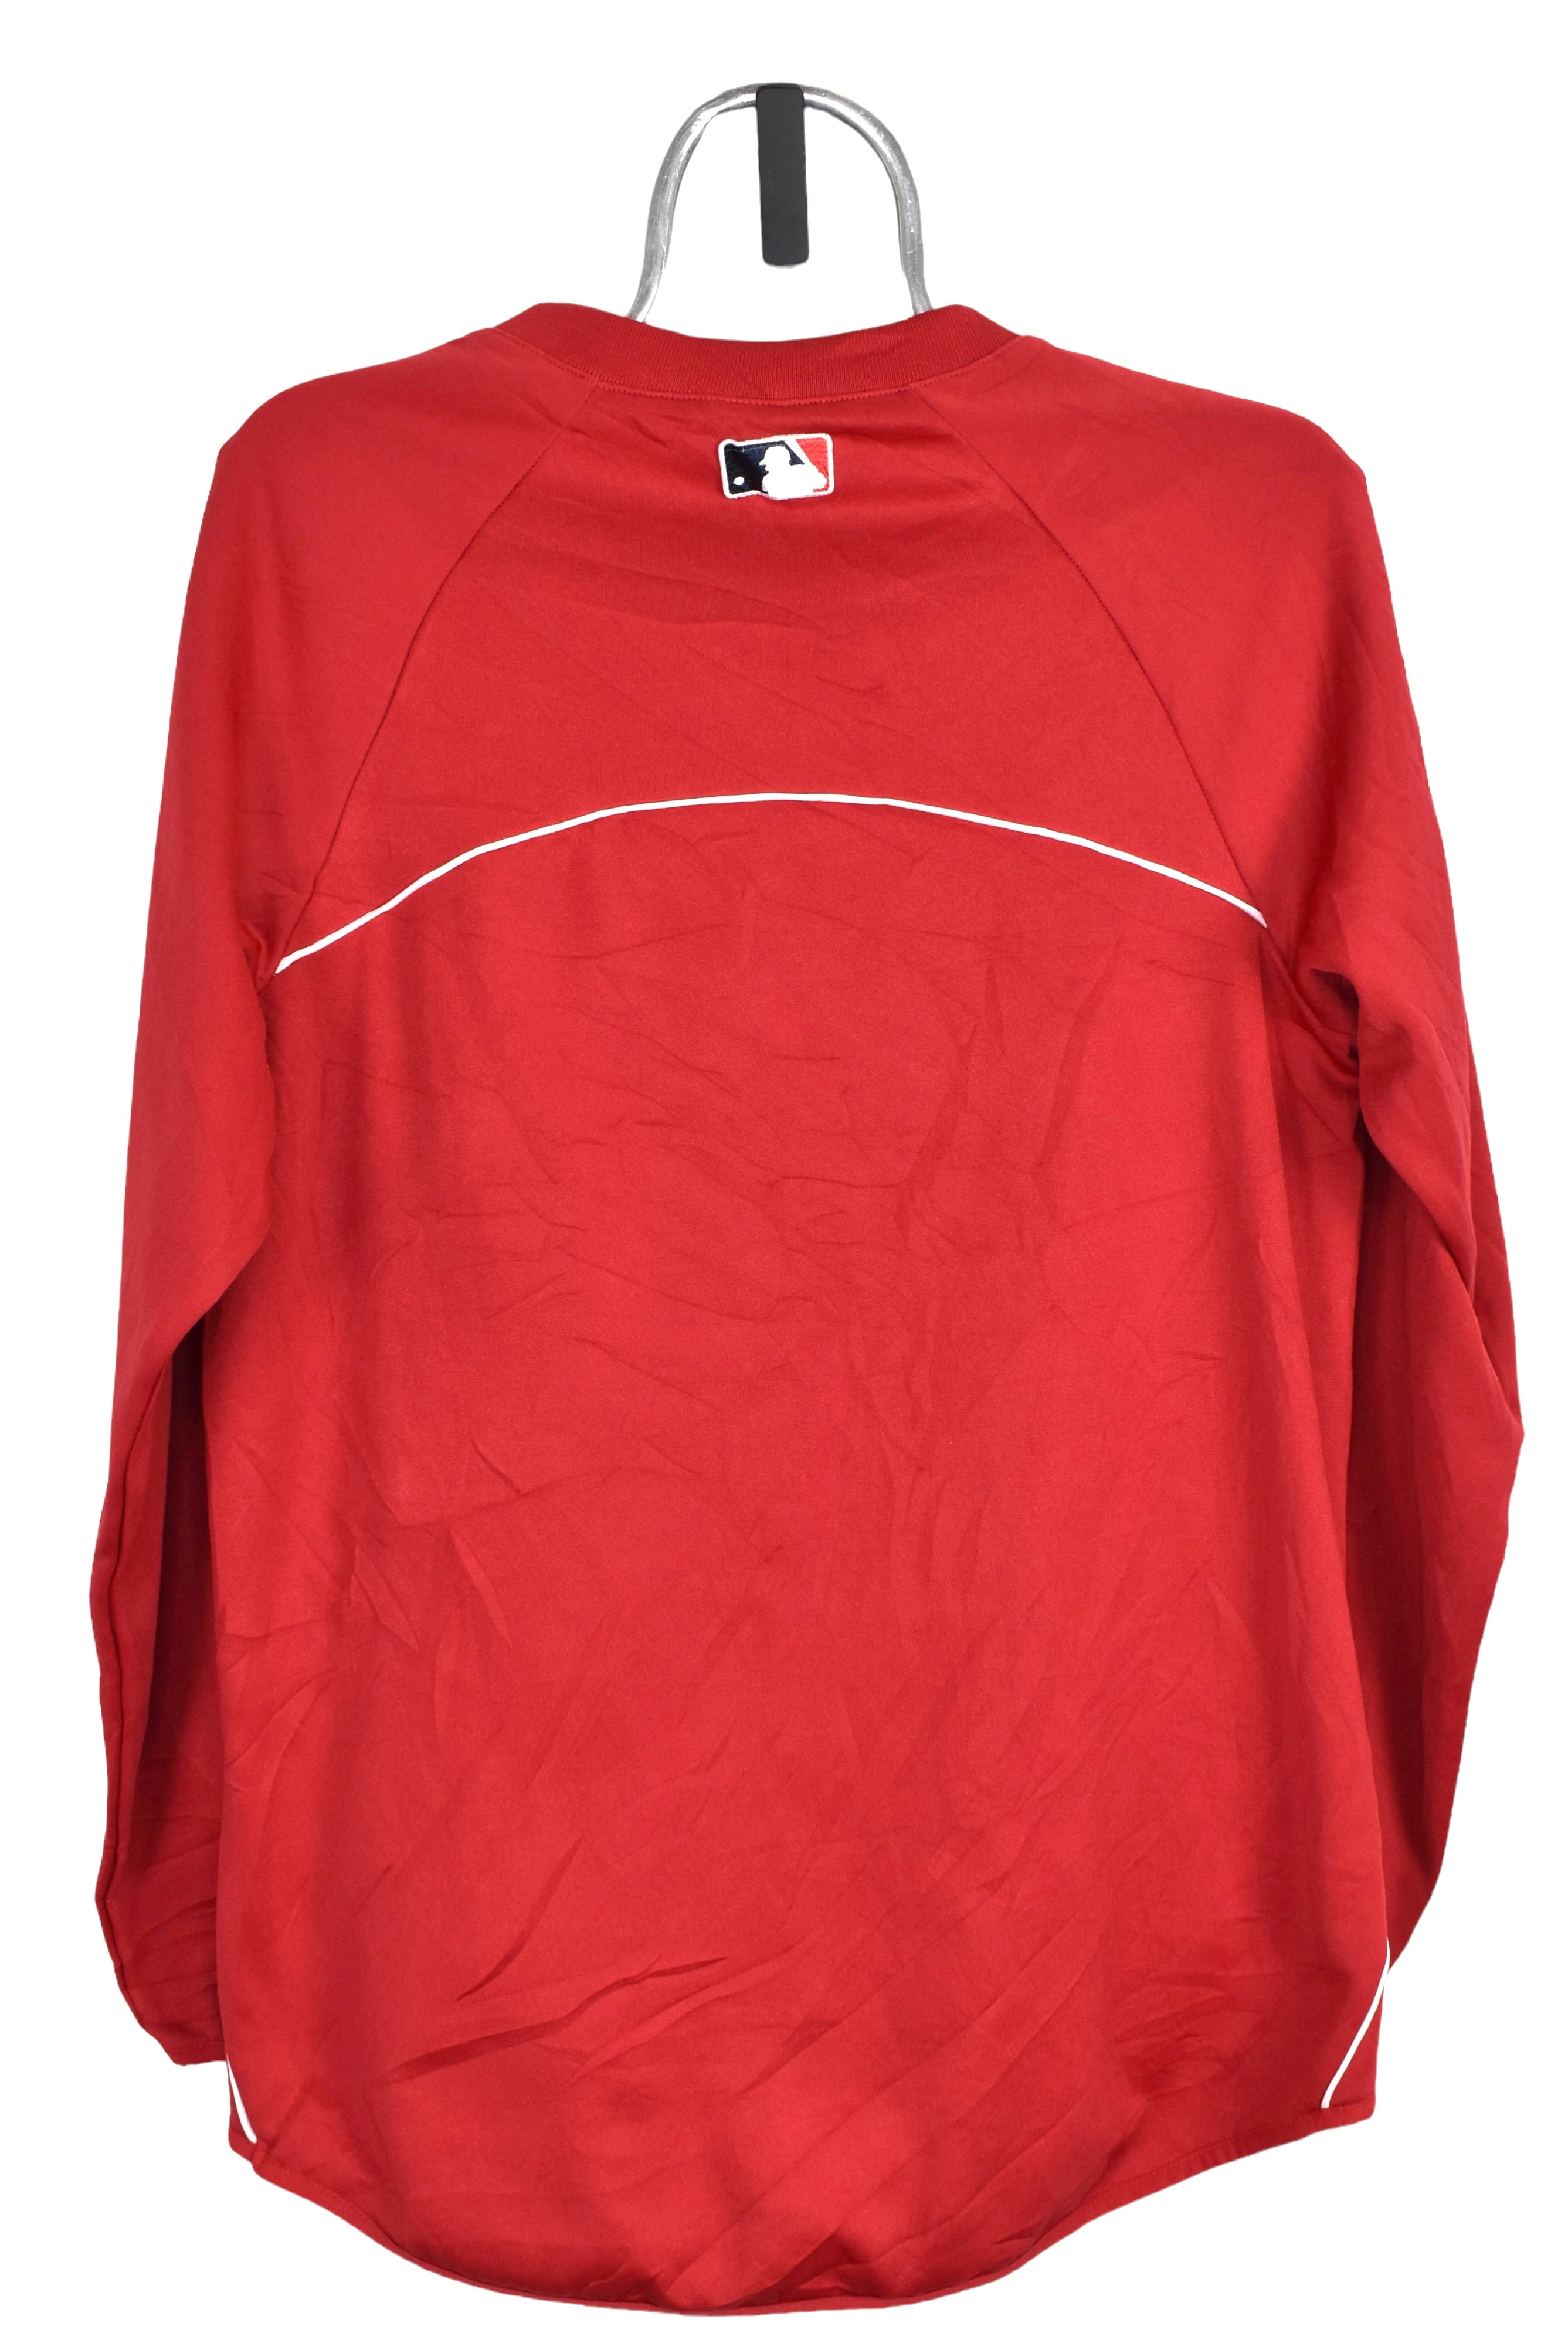 Vintage Boston Red Sox sweatshirt (M), red MLB embroidered crewneck